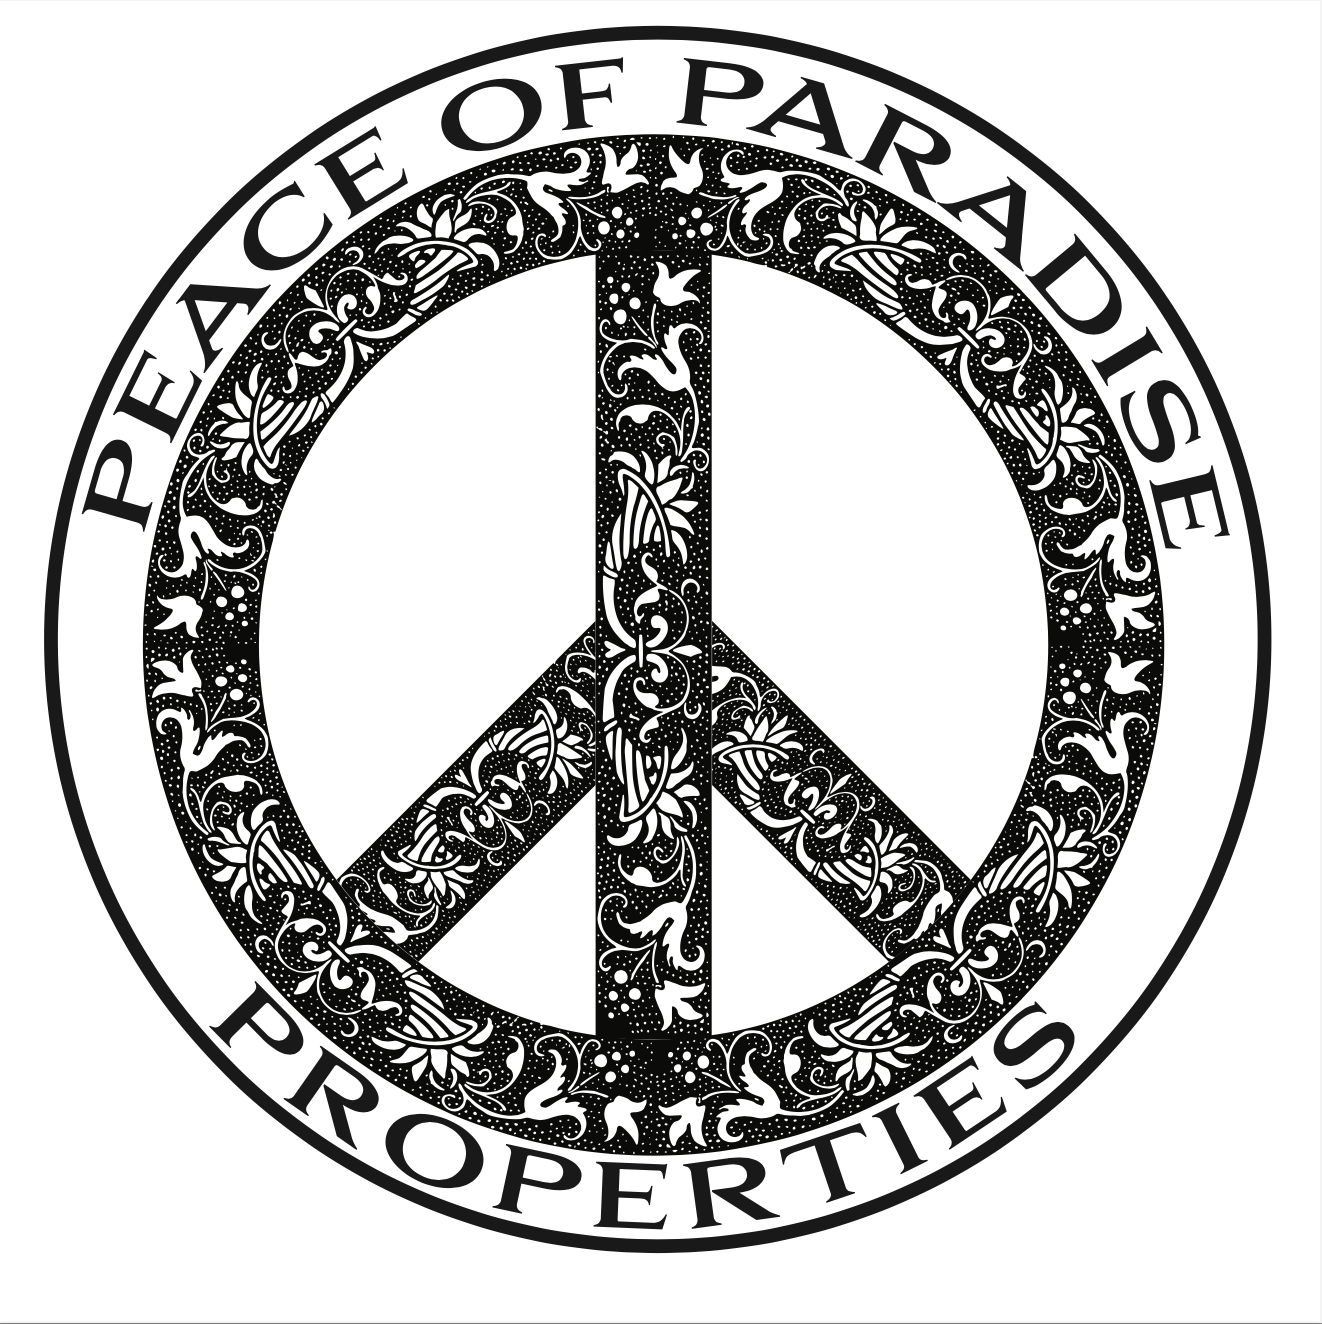 Peace of Paradise